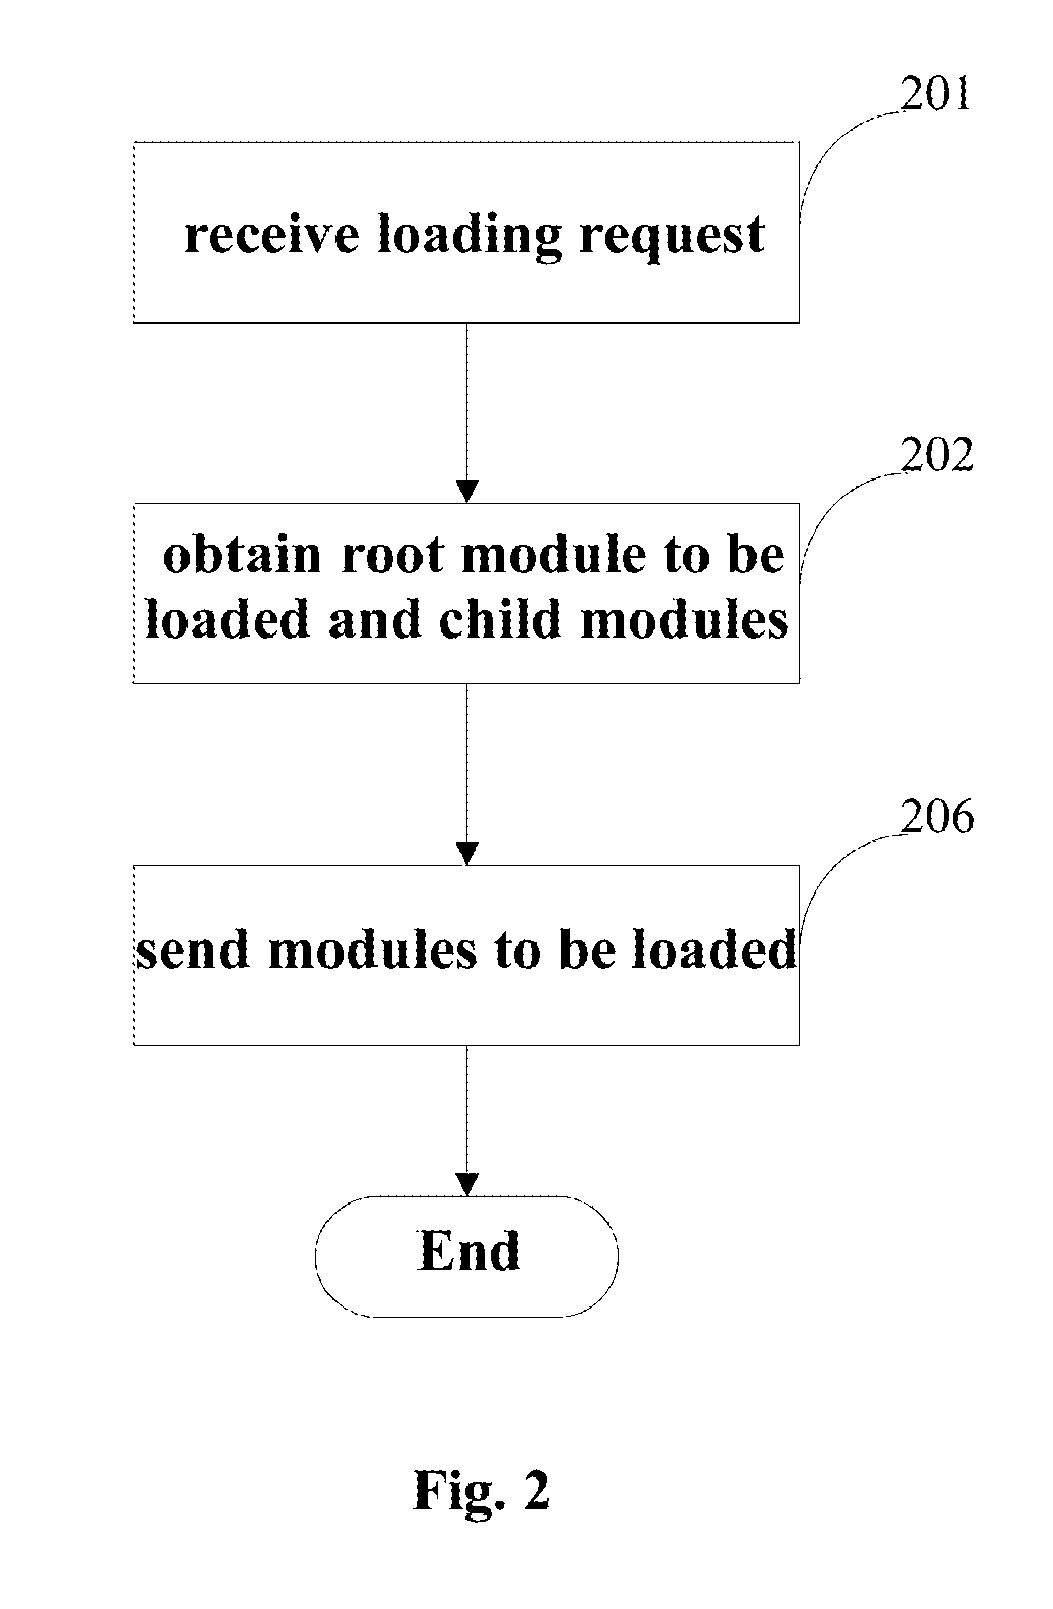 Loading program modules